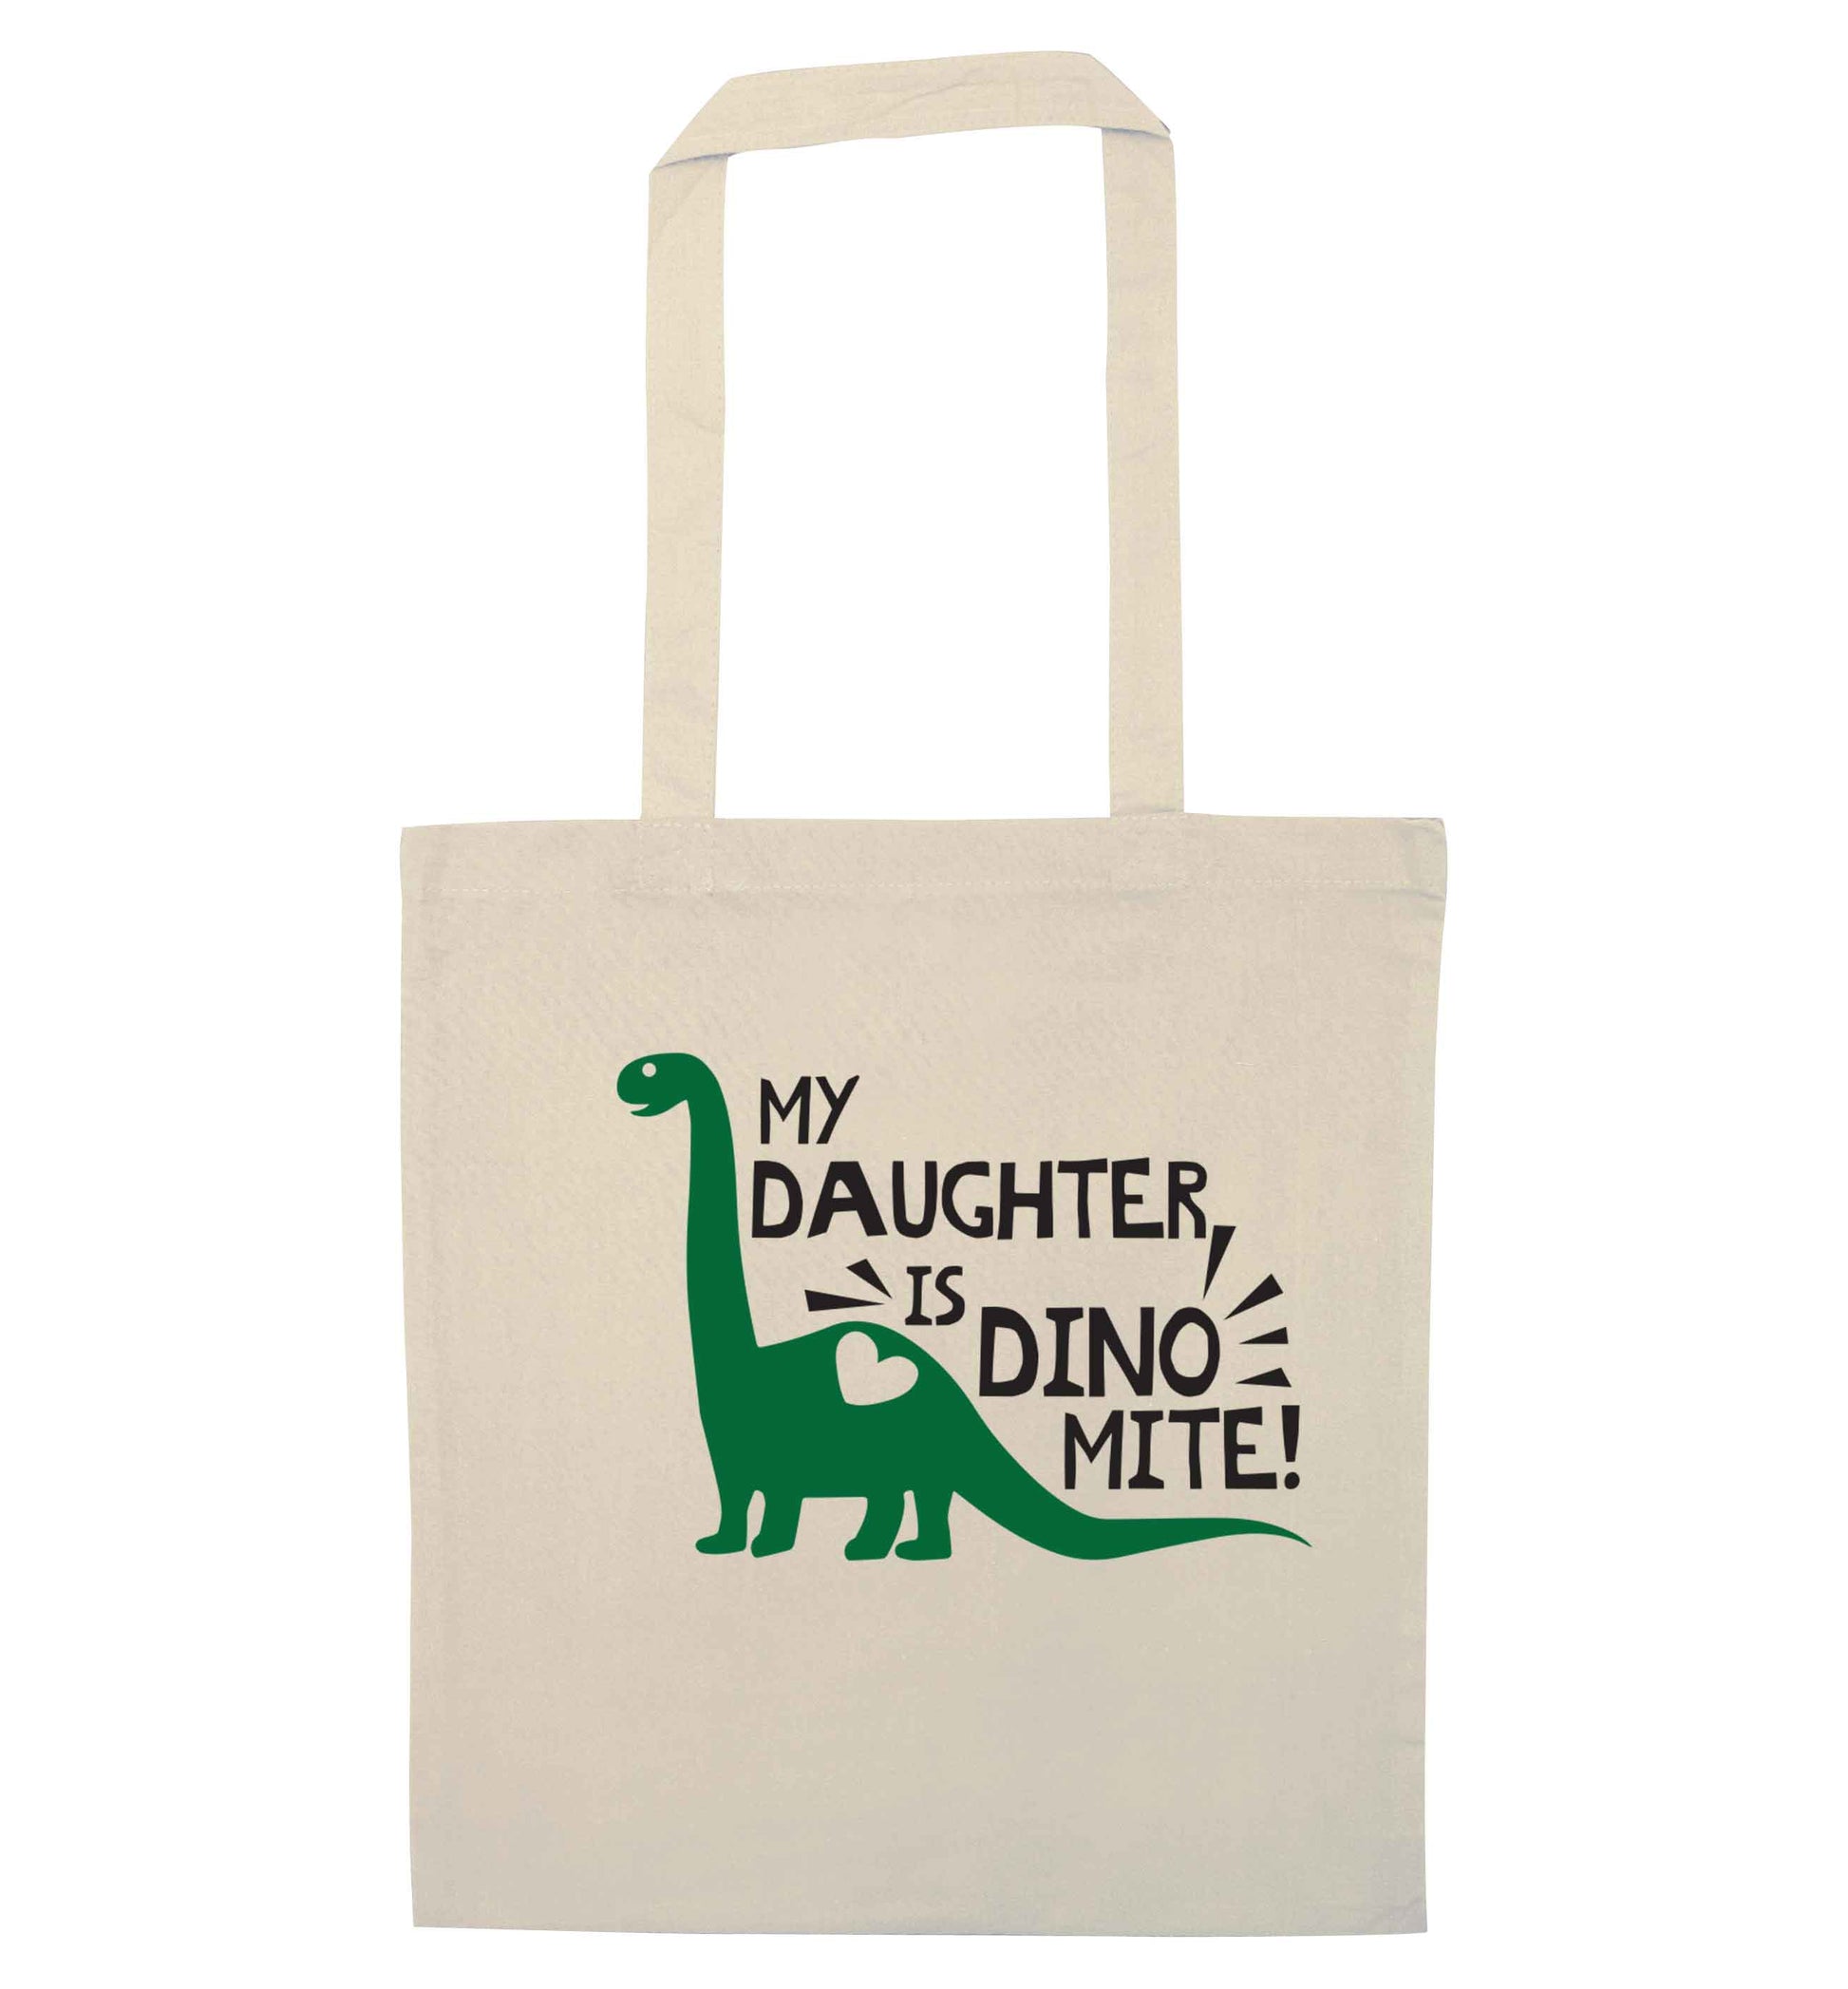 My daughter is dinomite! natural tote bag